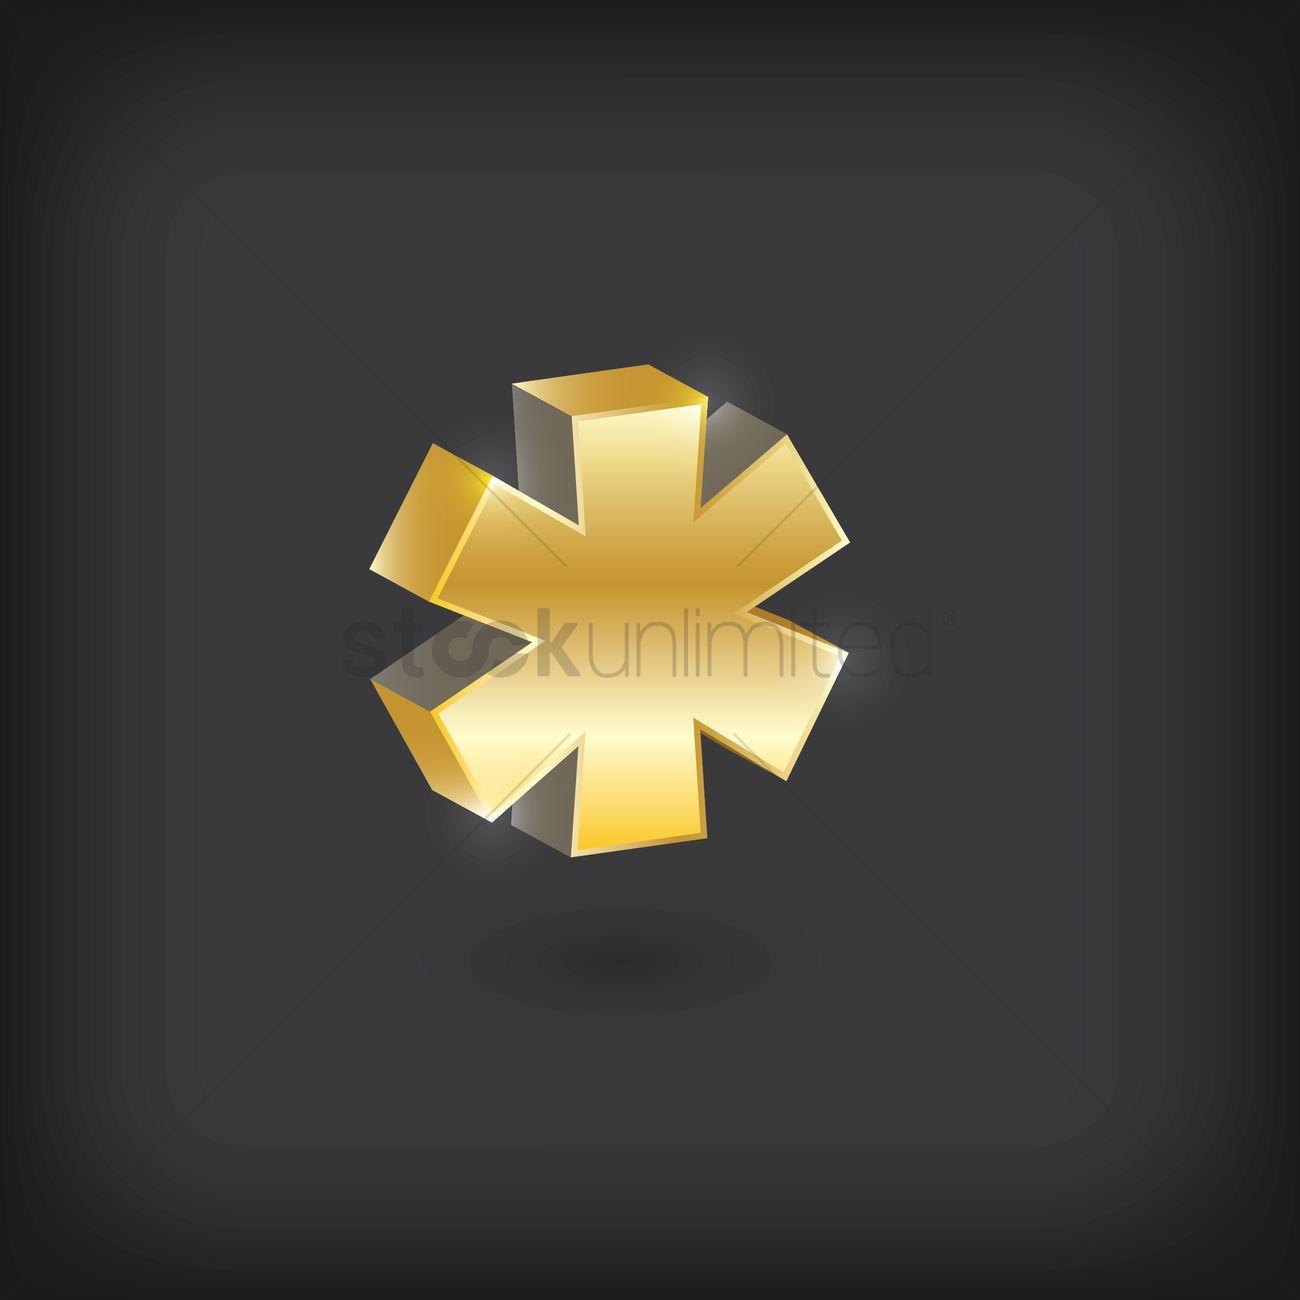 Yellow Asterisk Logo - Asterisk symbol Vector Image - 1871354 | StockUnlimited